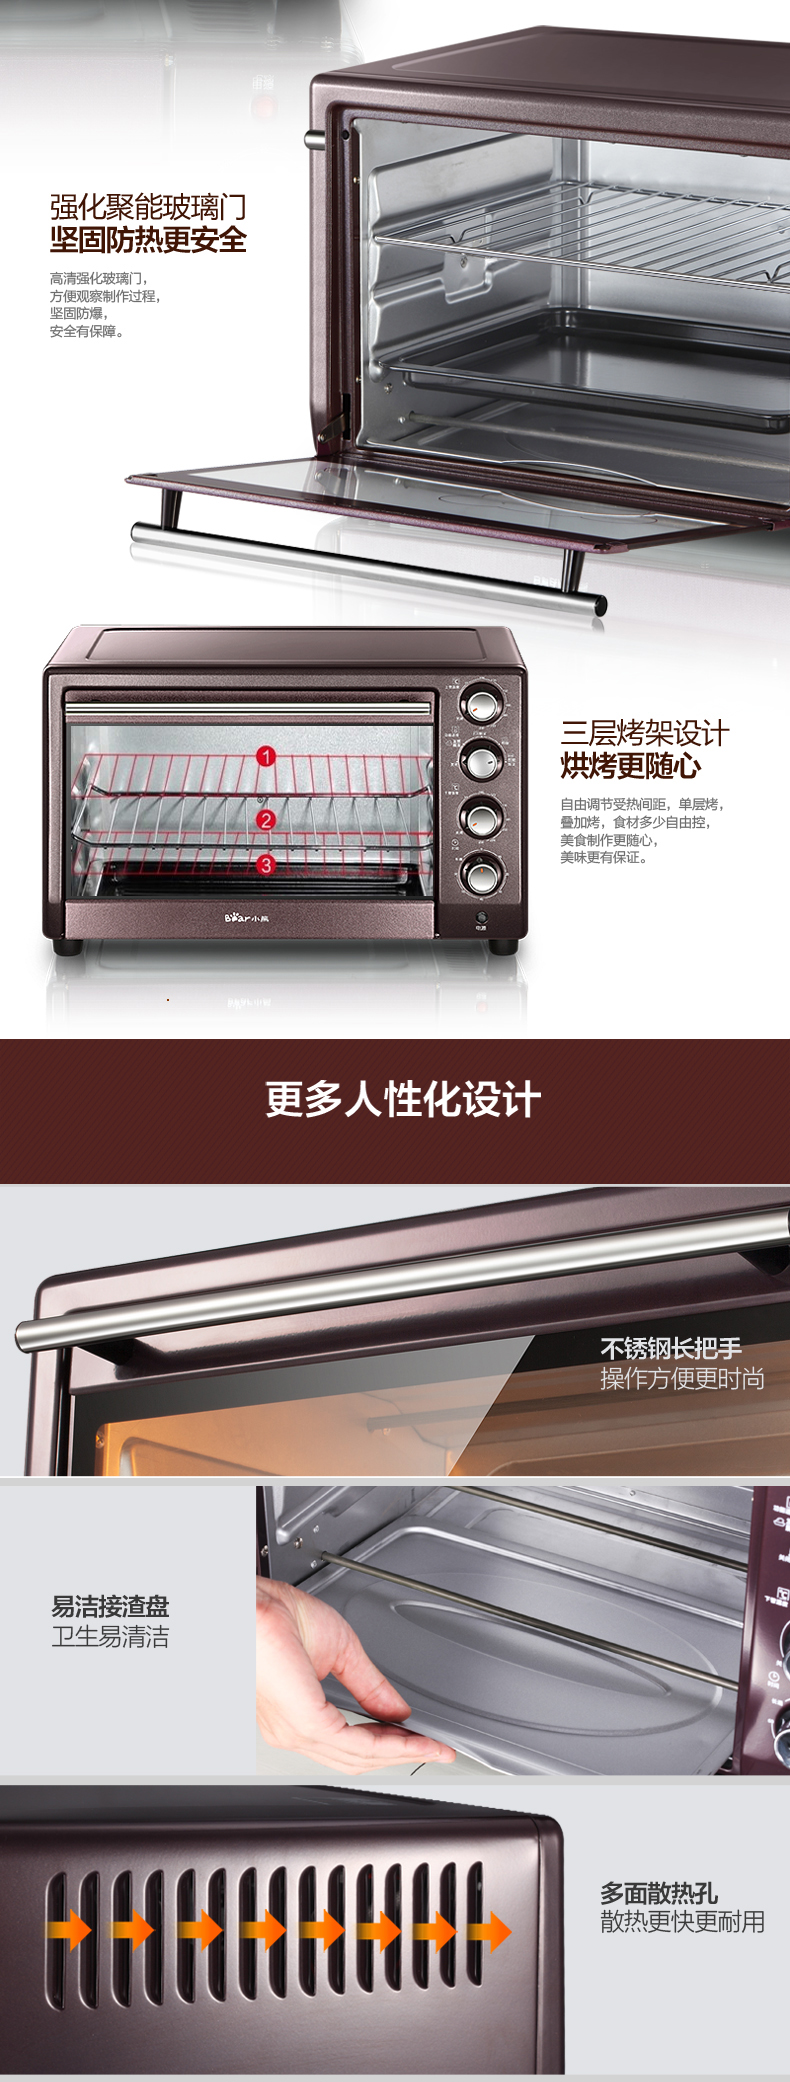 Bear/小熊 DKX-230UB 30L家用多功能烘焙电烤箱上下独立控温